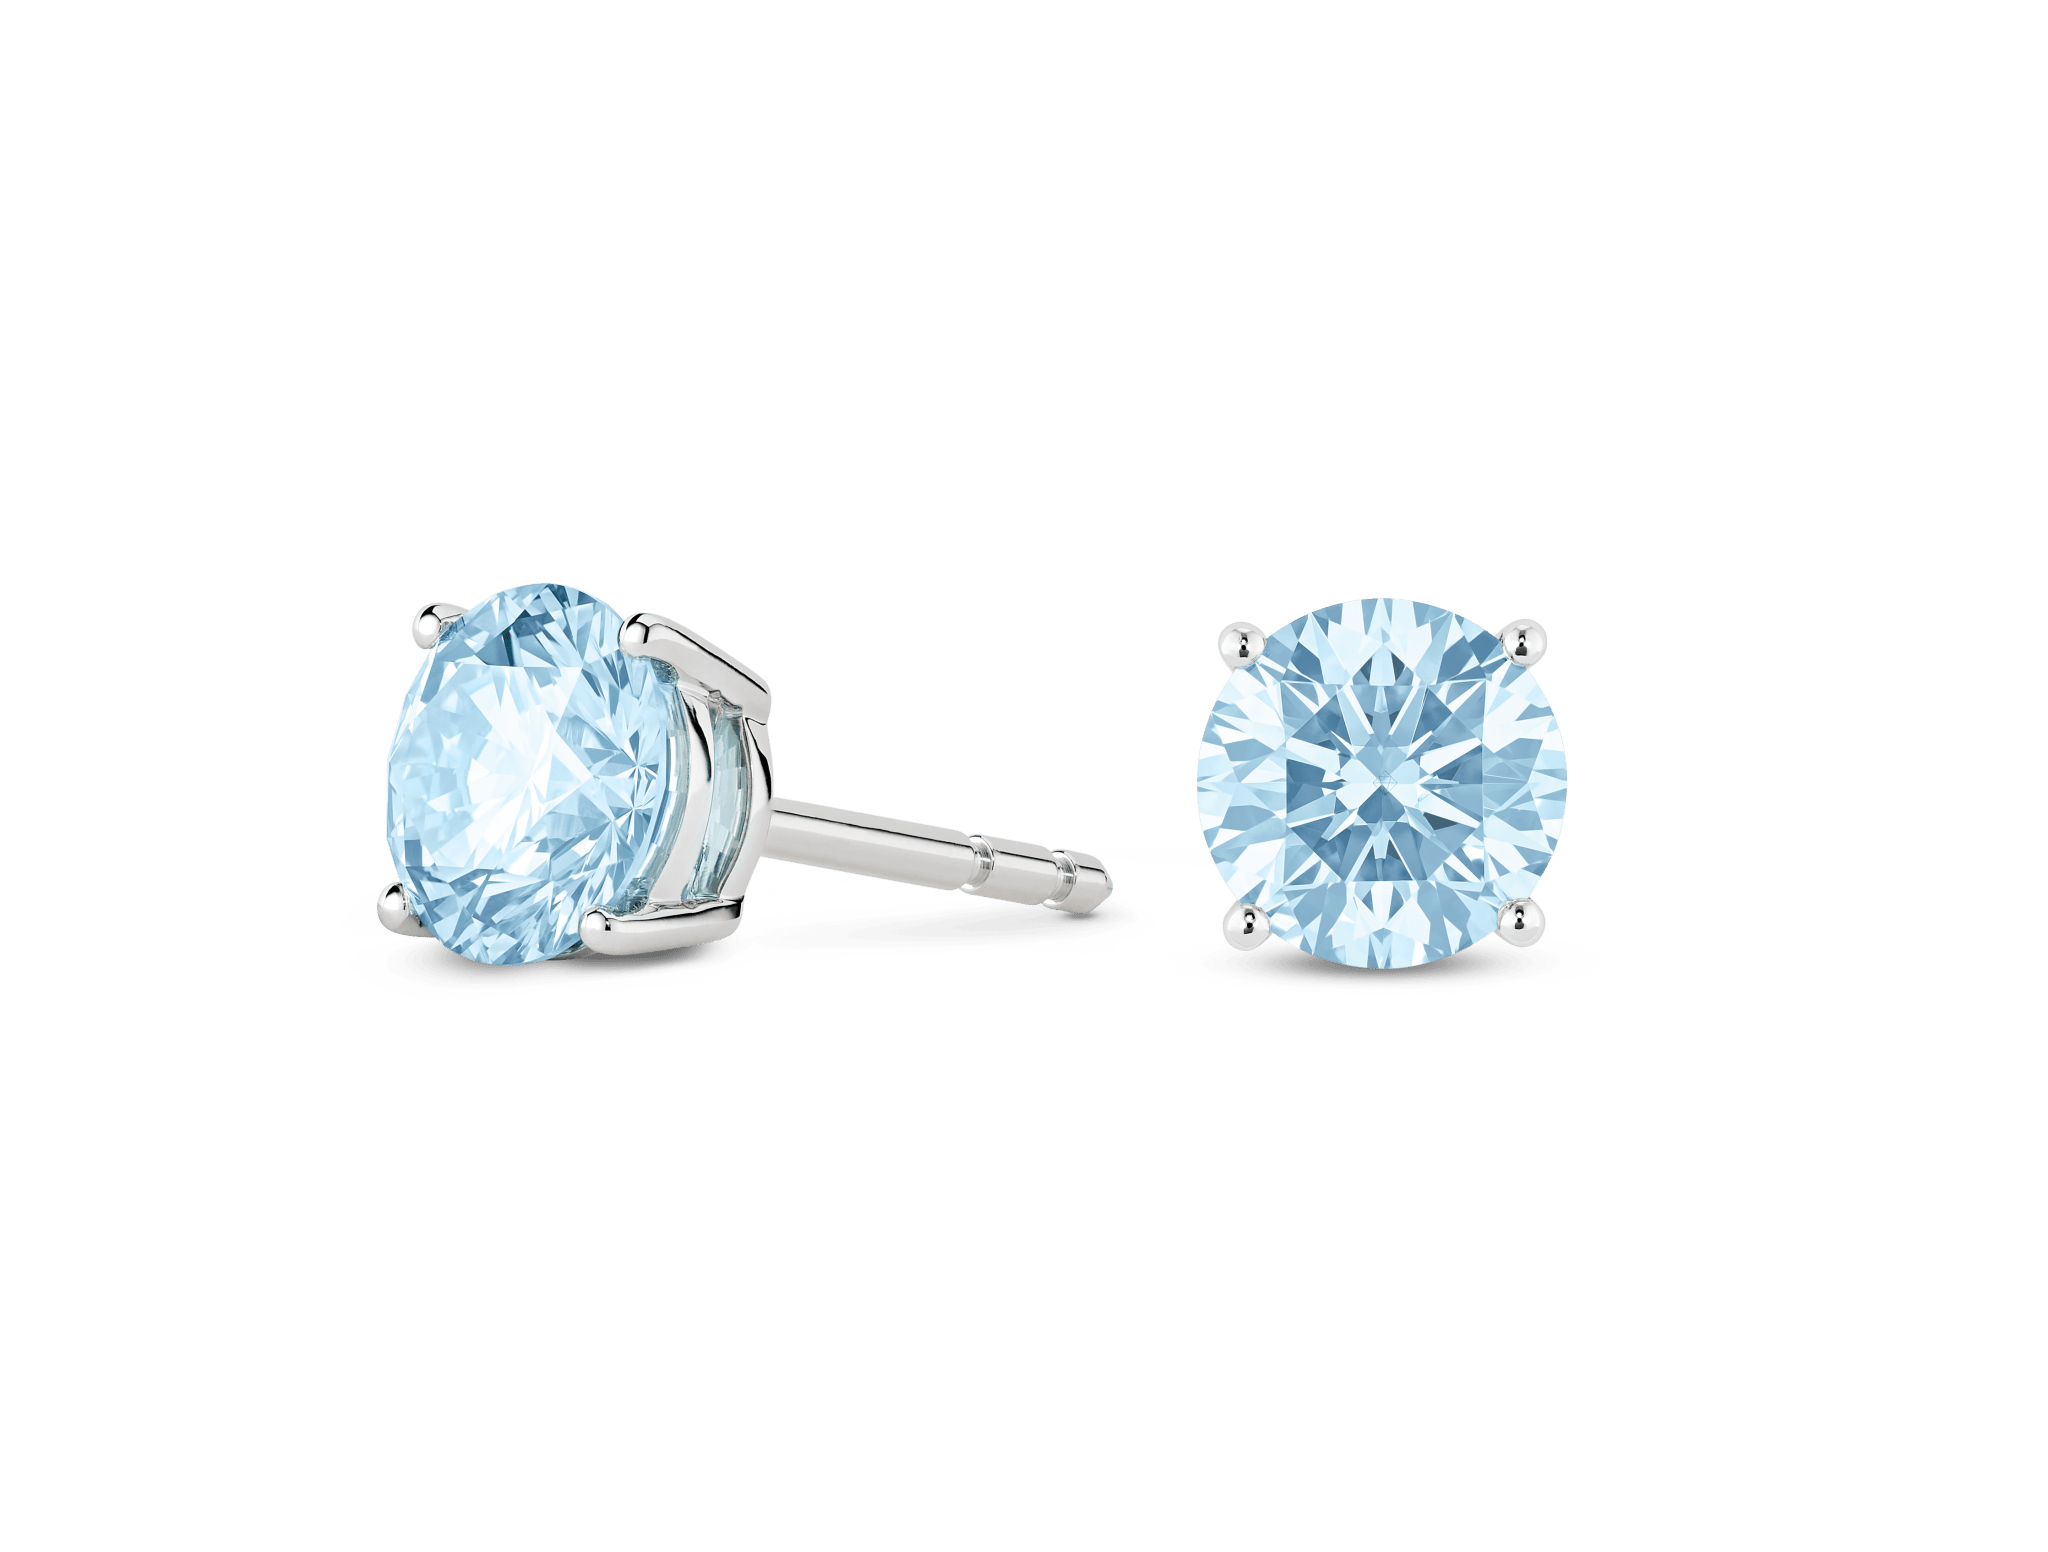 Finest Lab-Grown Diamond 2ct. tw. Round Brilliant Solitaire Studs | Blue - #Lightbox Jewelry#